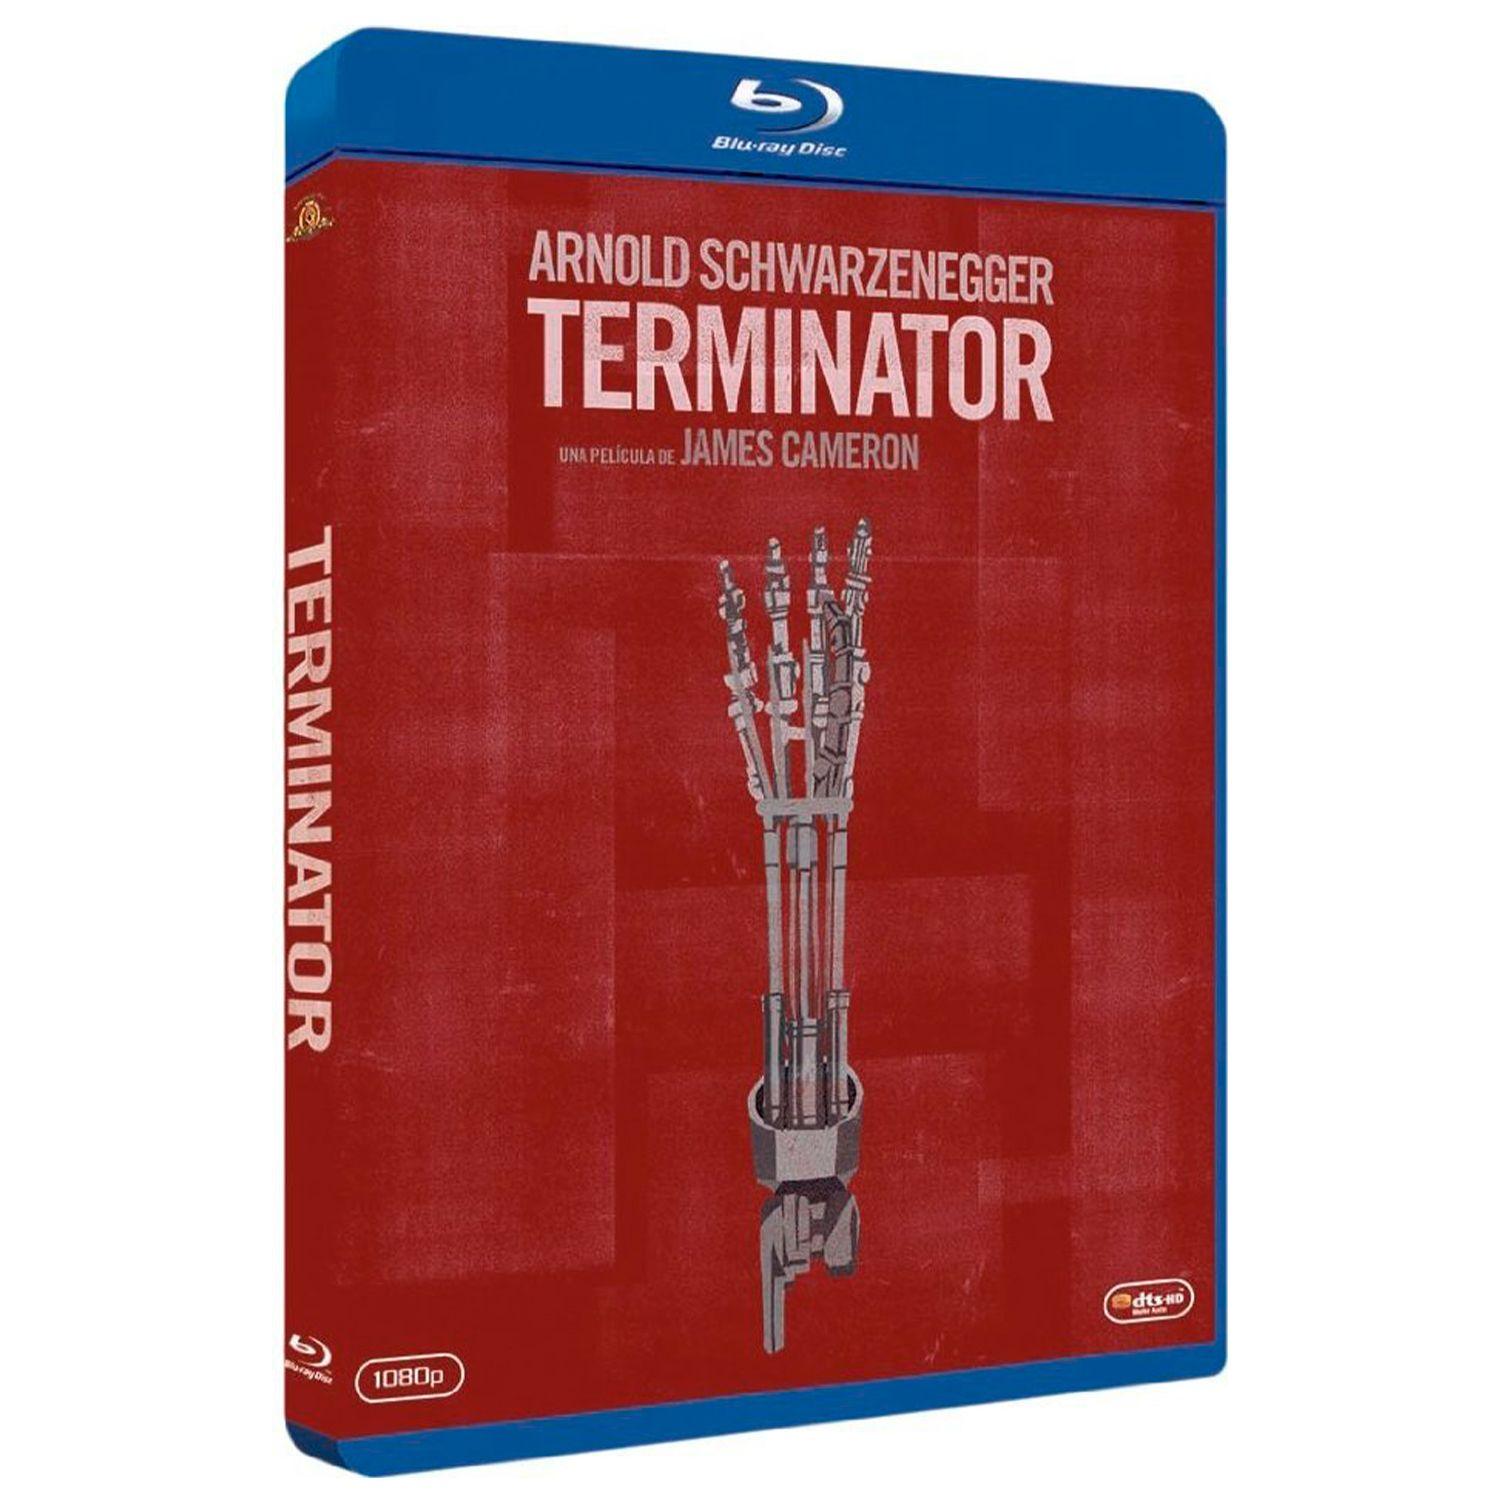 The Terminator 1984 Blu Ray Illustrated Cover Art Bluraymania